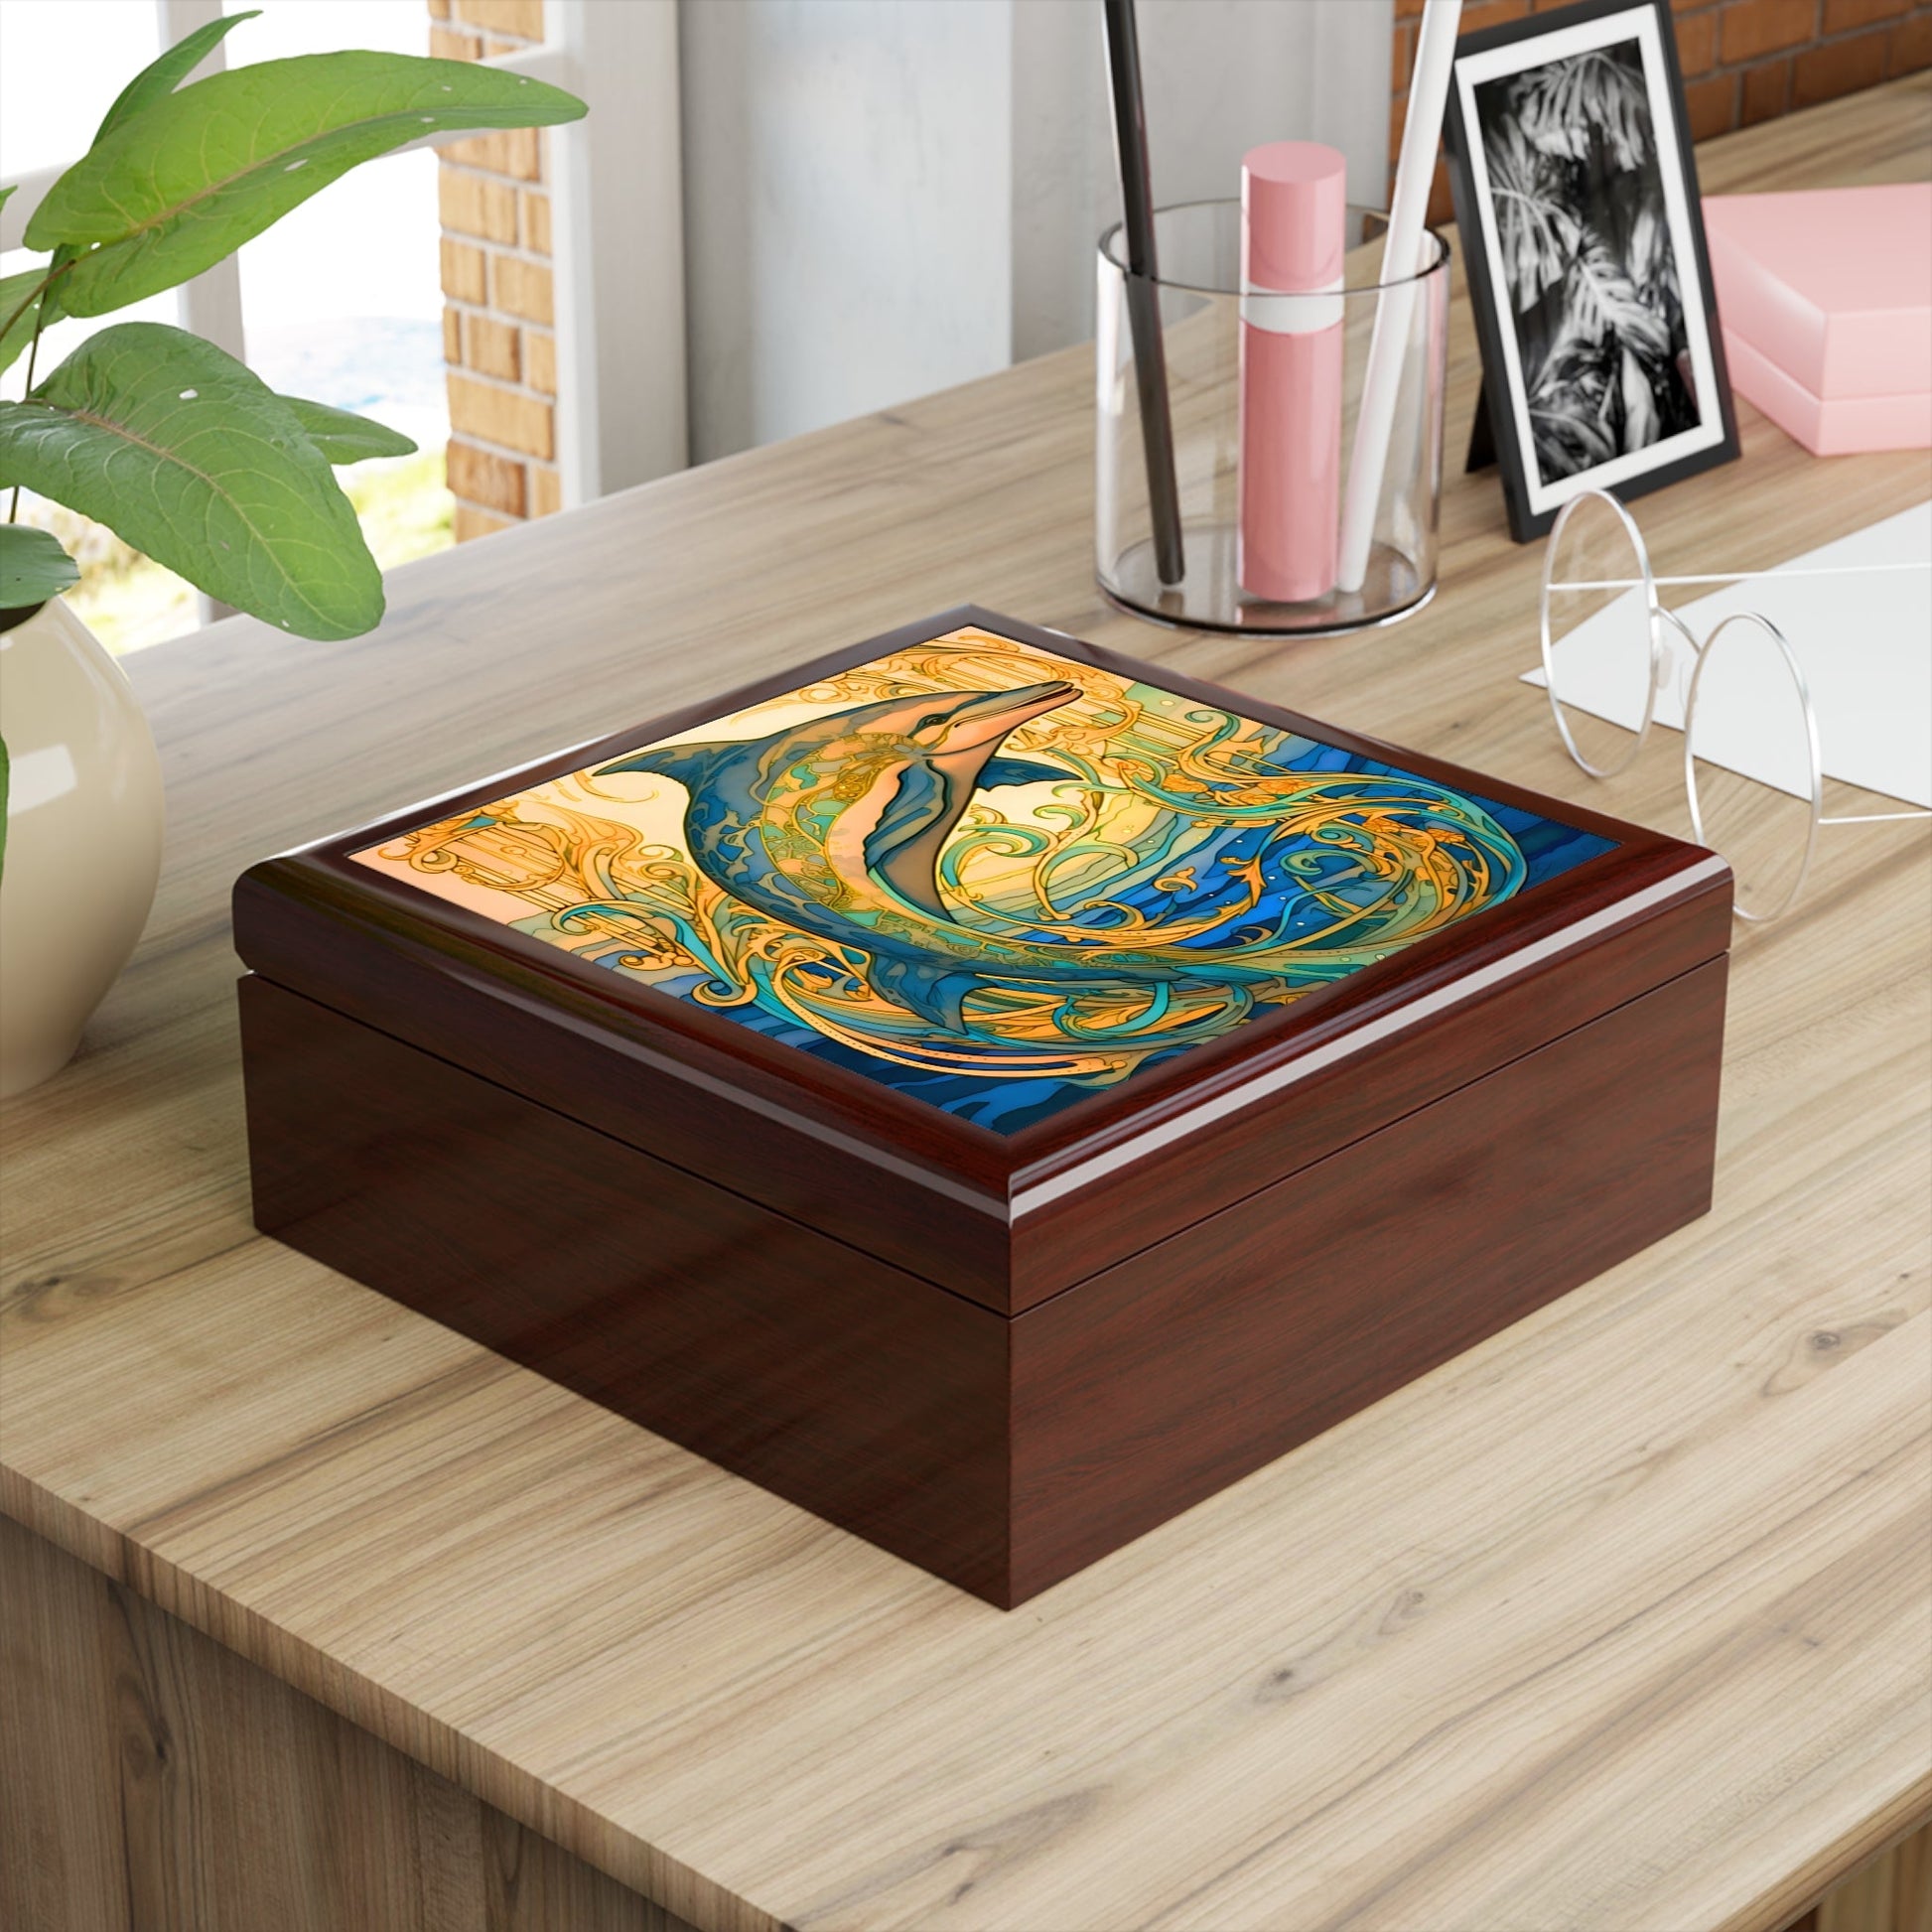 Art Nouveau Golden Dolphin Fine Art Print Jewelry Keepsake Trinkets Box